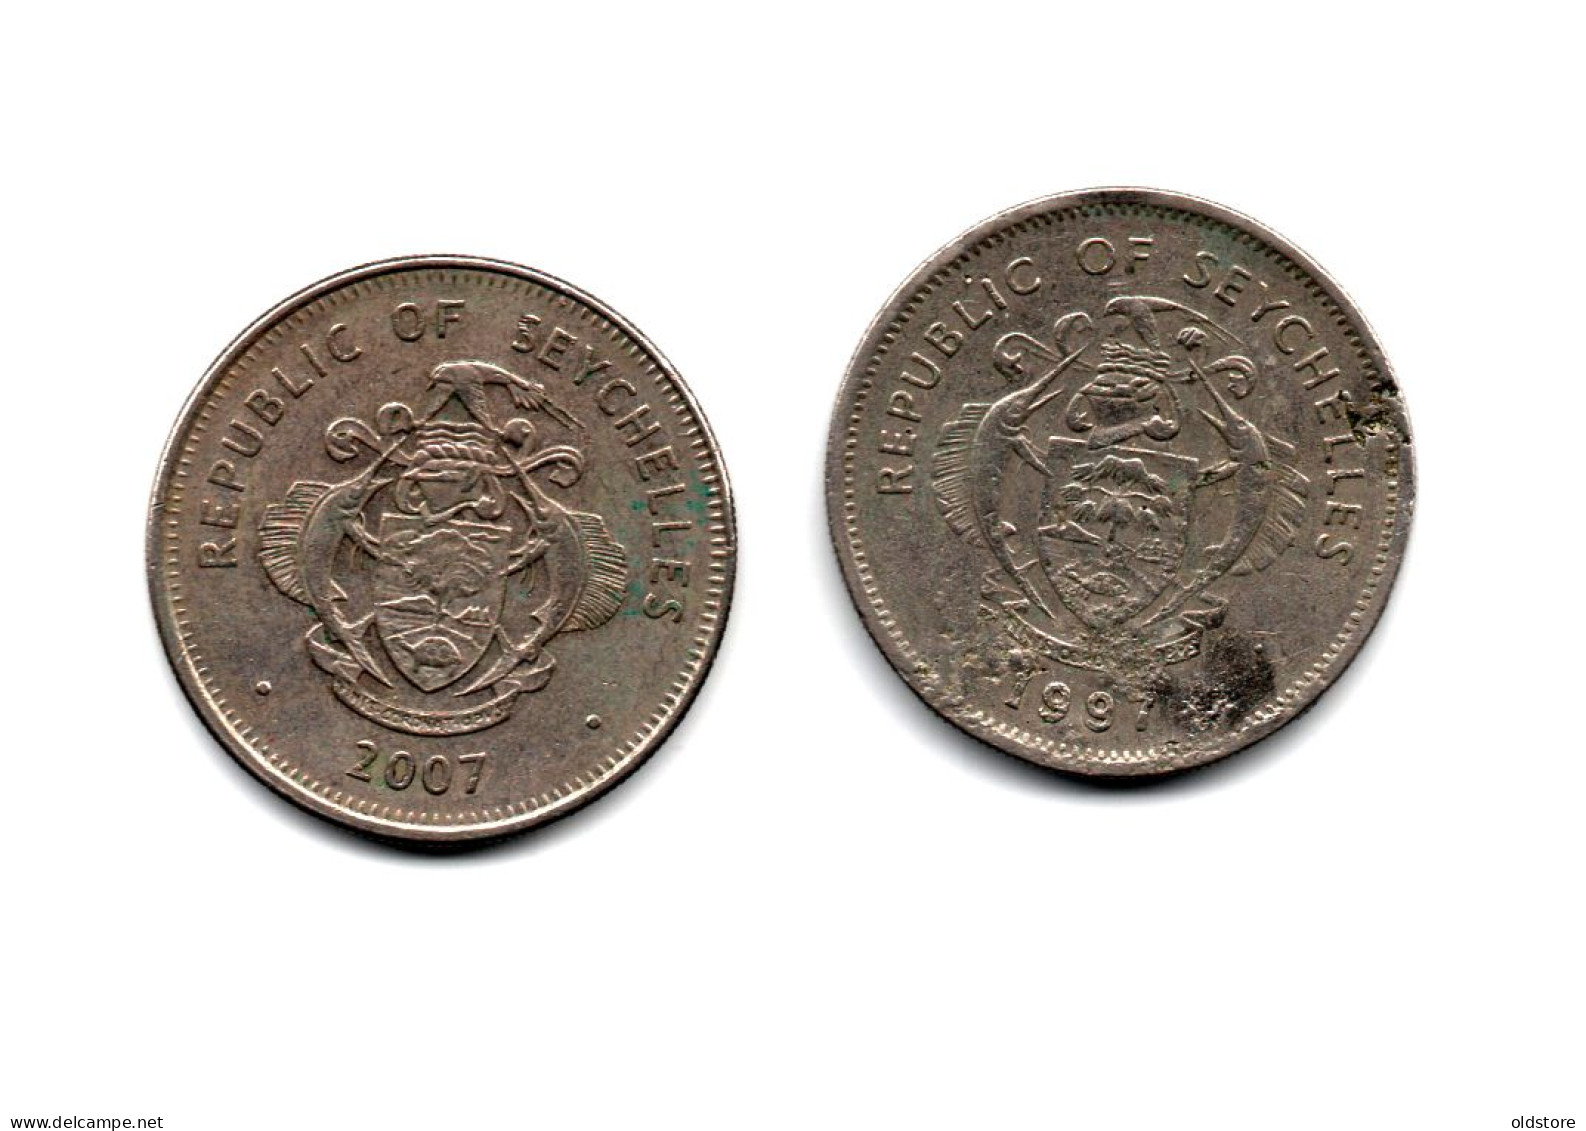 Seychelles Coins - 1 Rupee Old Rare (( ERROR ))  Coin - ND 1997 #5 - Seychellen